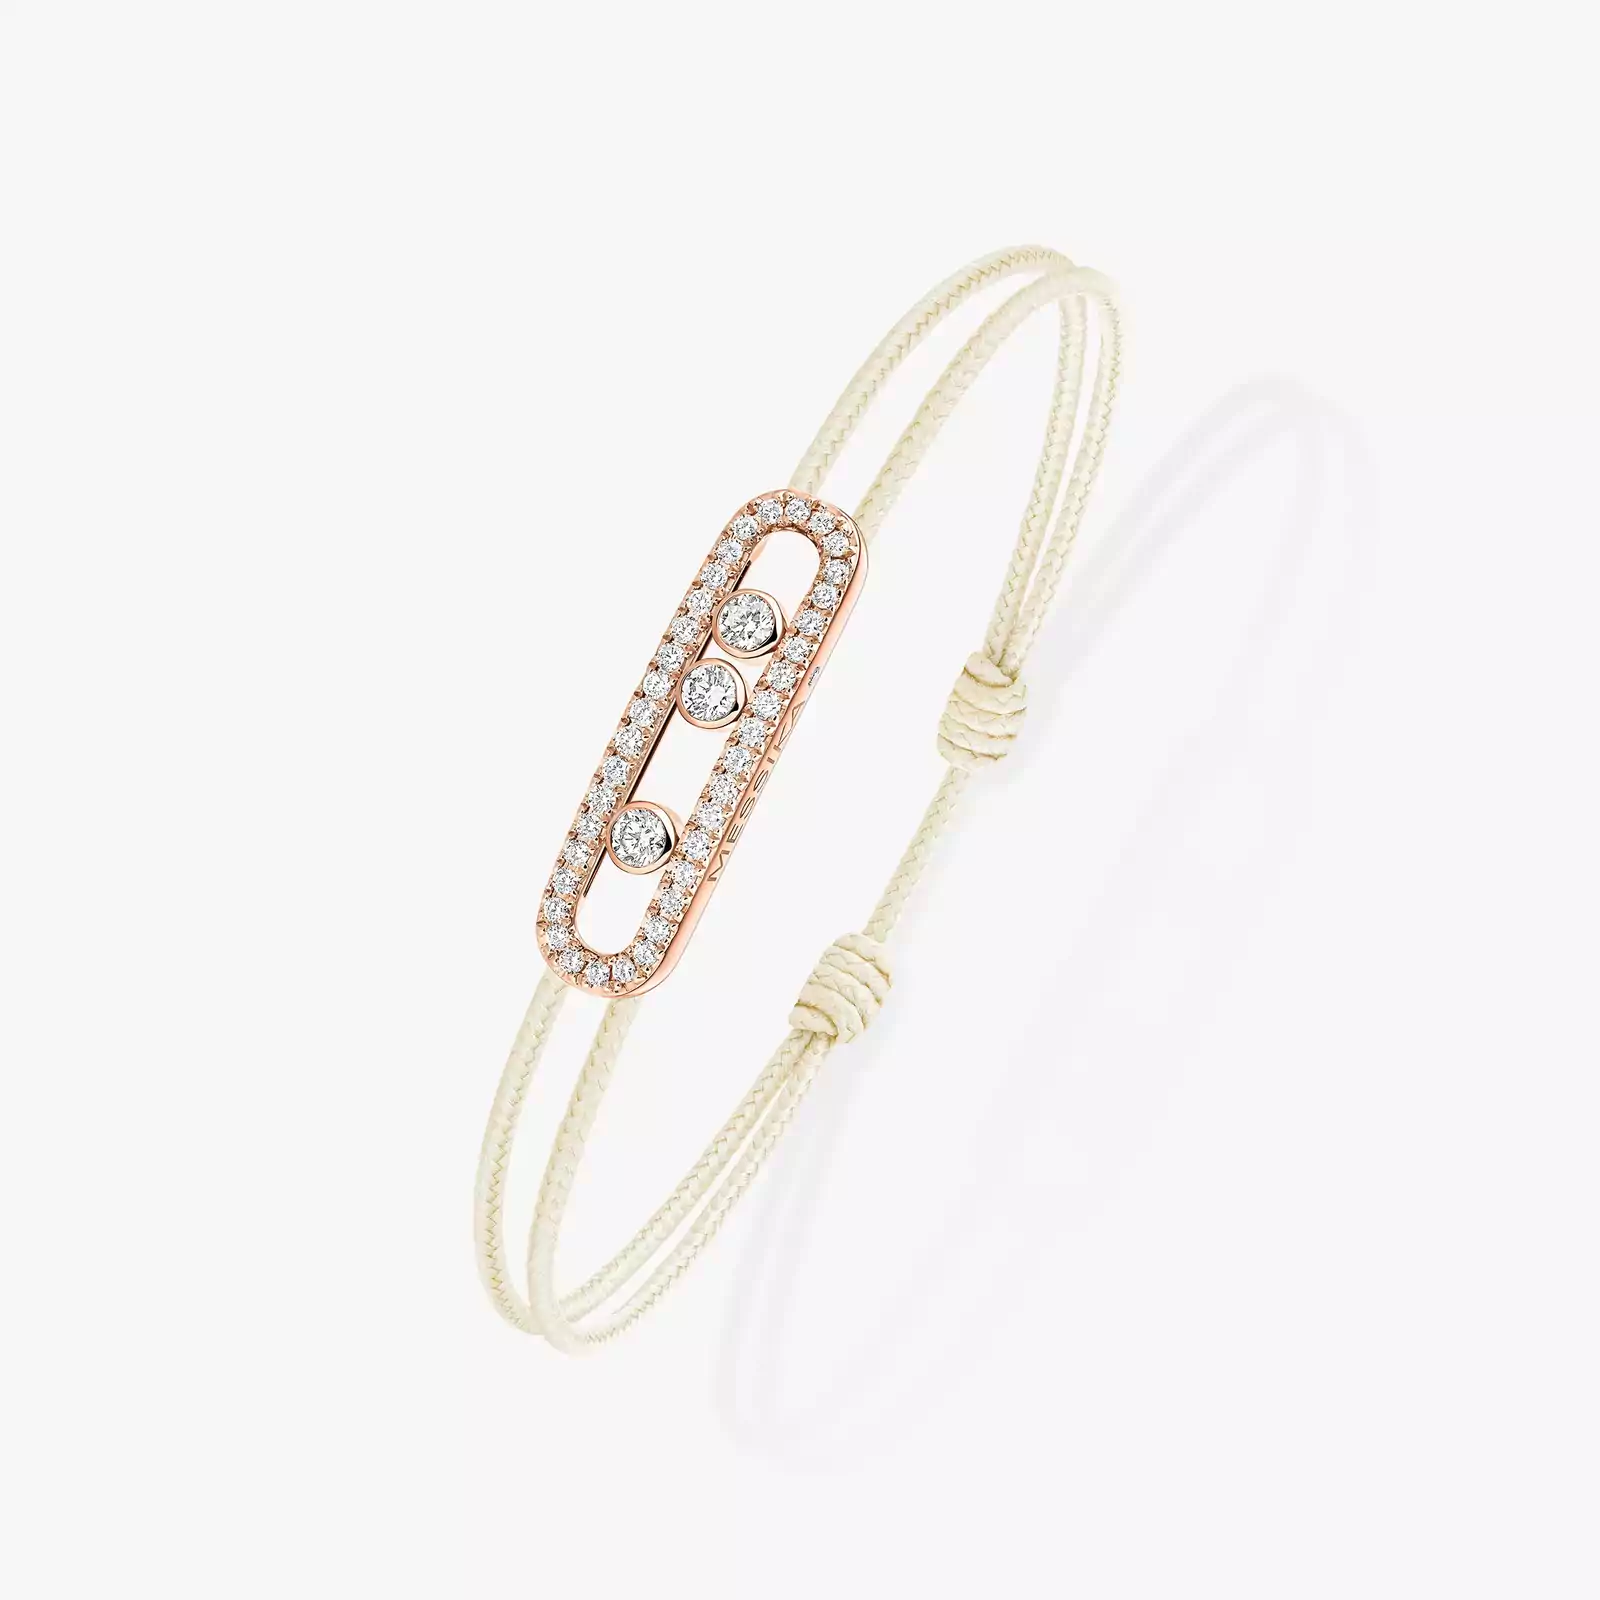 Bracelet For Her Pink Gold Diamond Messika CARE(S) Cream Cord Pavé Bracelet 14101-PG